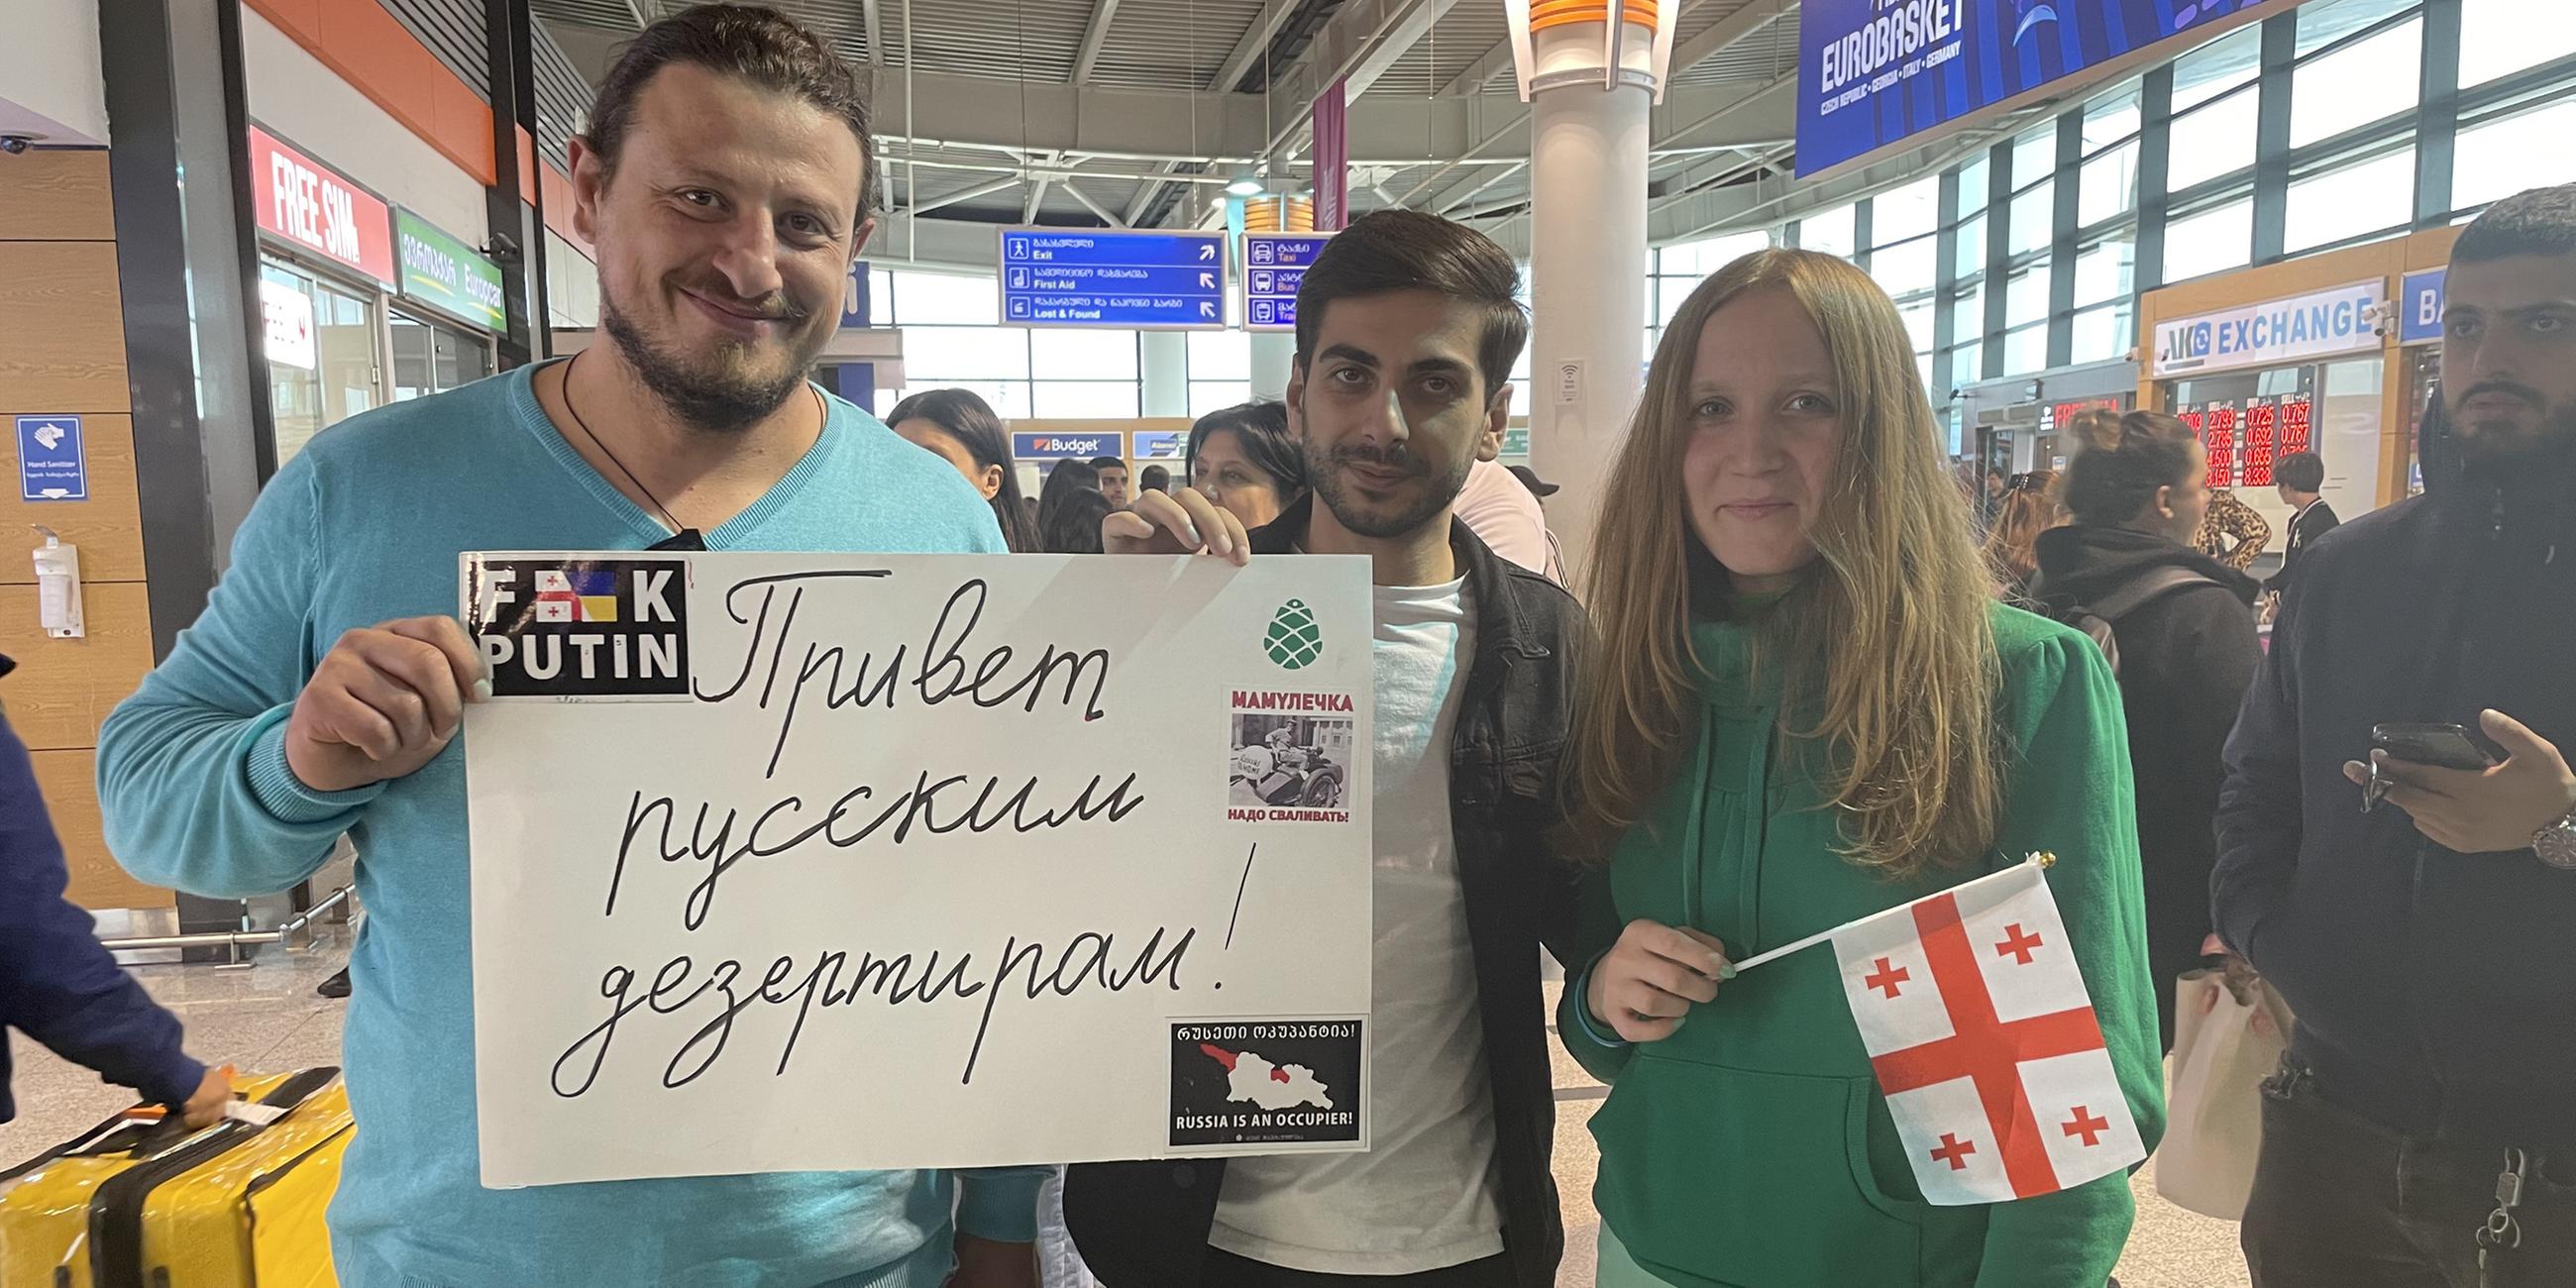 Russische Flüchtlinge in Georgien unterwünscht